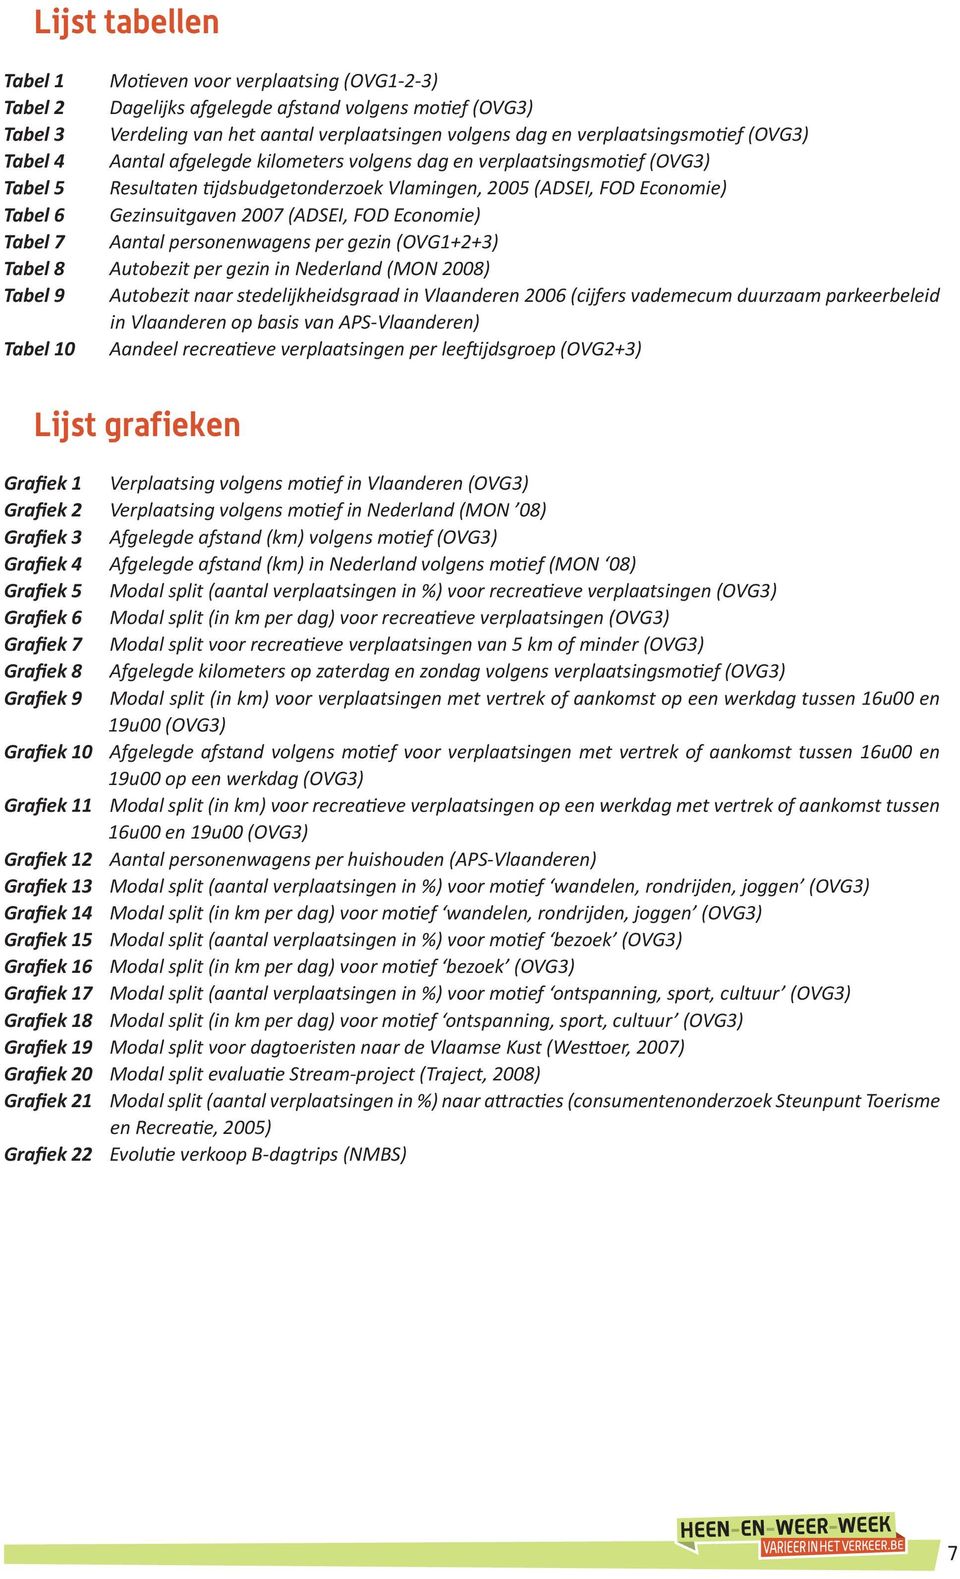 Gezinsuitgaven 2007 (ADSEI, FOD Economie) Tabel 7 Aantal personenwagens per gezin (OVG1+2+3) Tabel 8 Autobezit per gezin in Nederland (MON 2008) Tabel 9 Autobezit naar stedelijkheidsgraad in